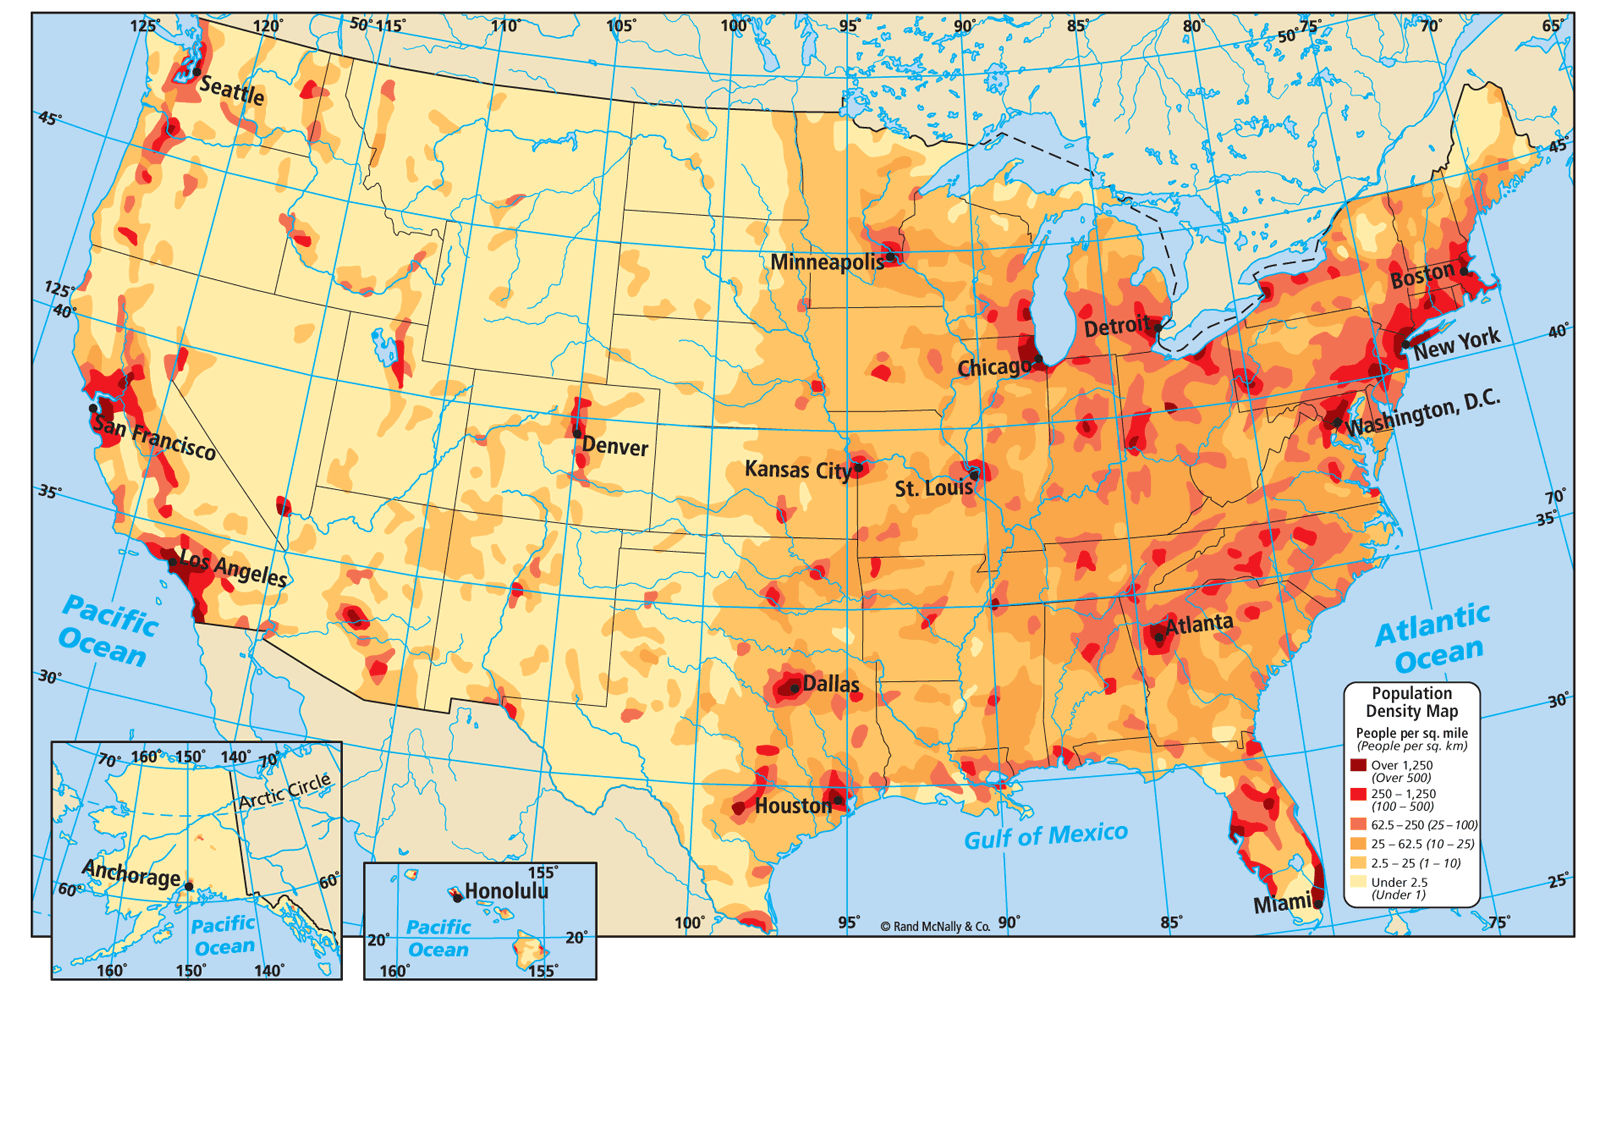 population-maps-of-us-7.png.2e8a8f8de7c4debf7b7b7ae10871fe3a.png